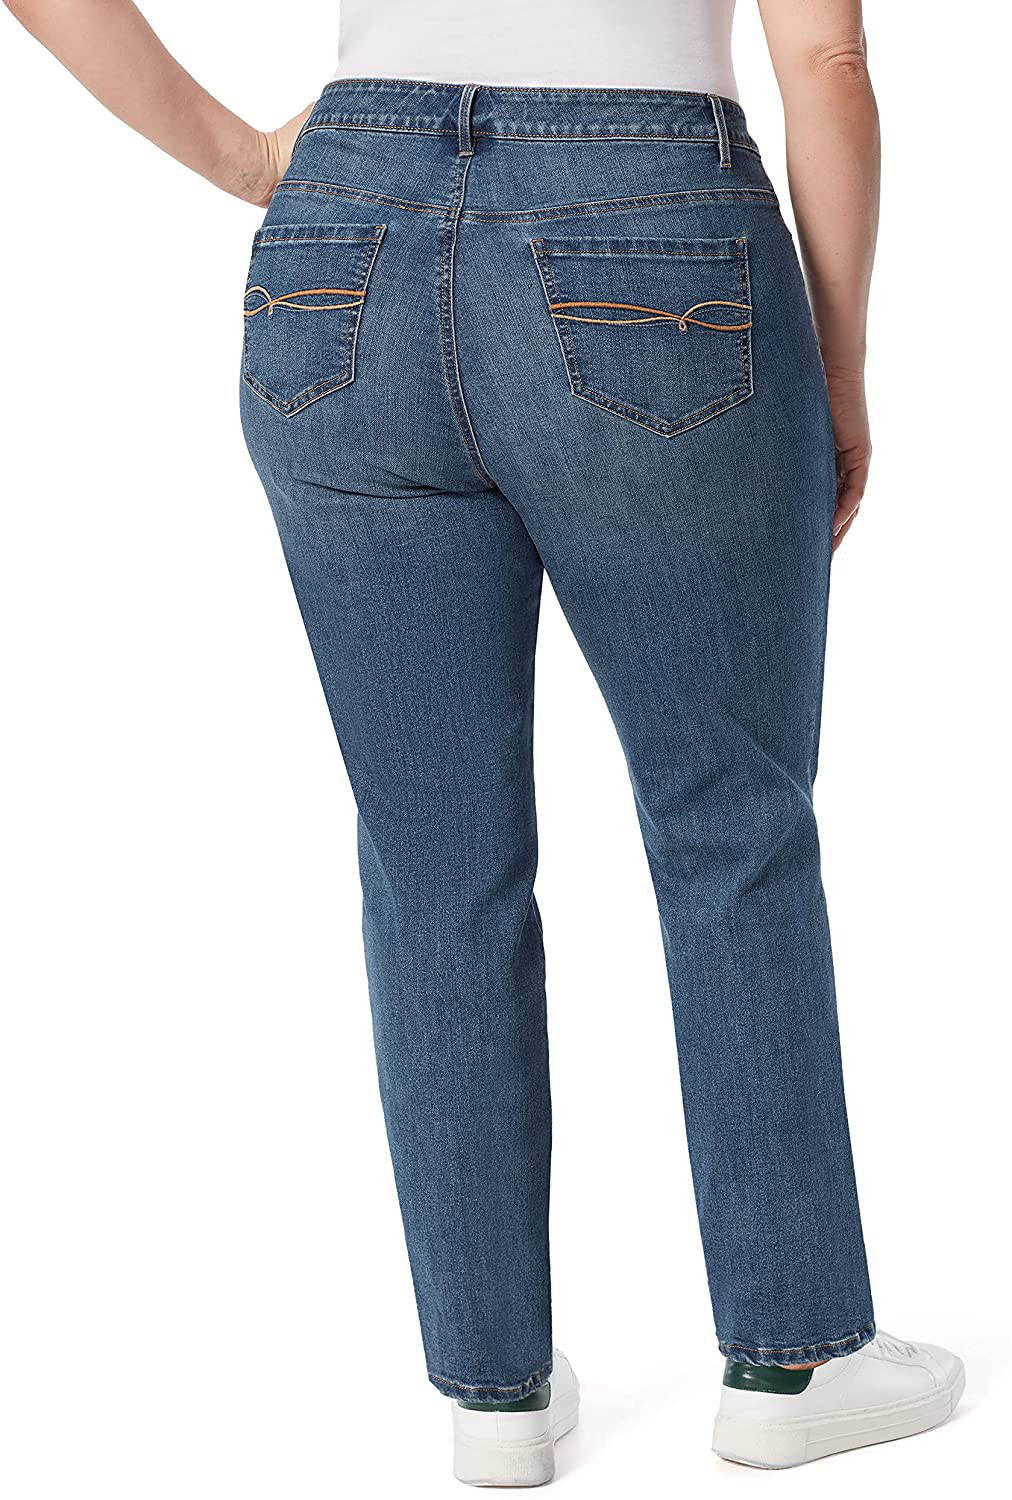 Gloria Vanderbilt Women's Amanda Slim High Rise Signature Pocket Jean